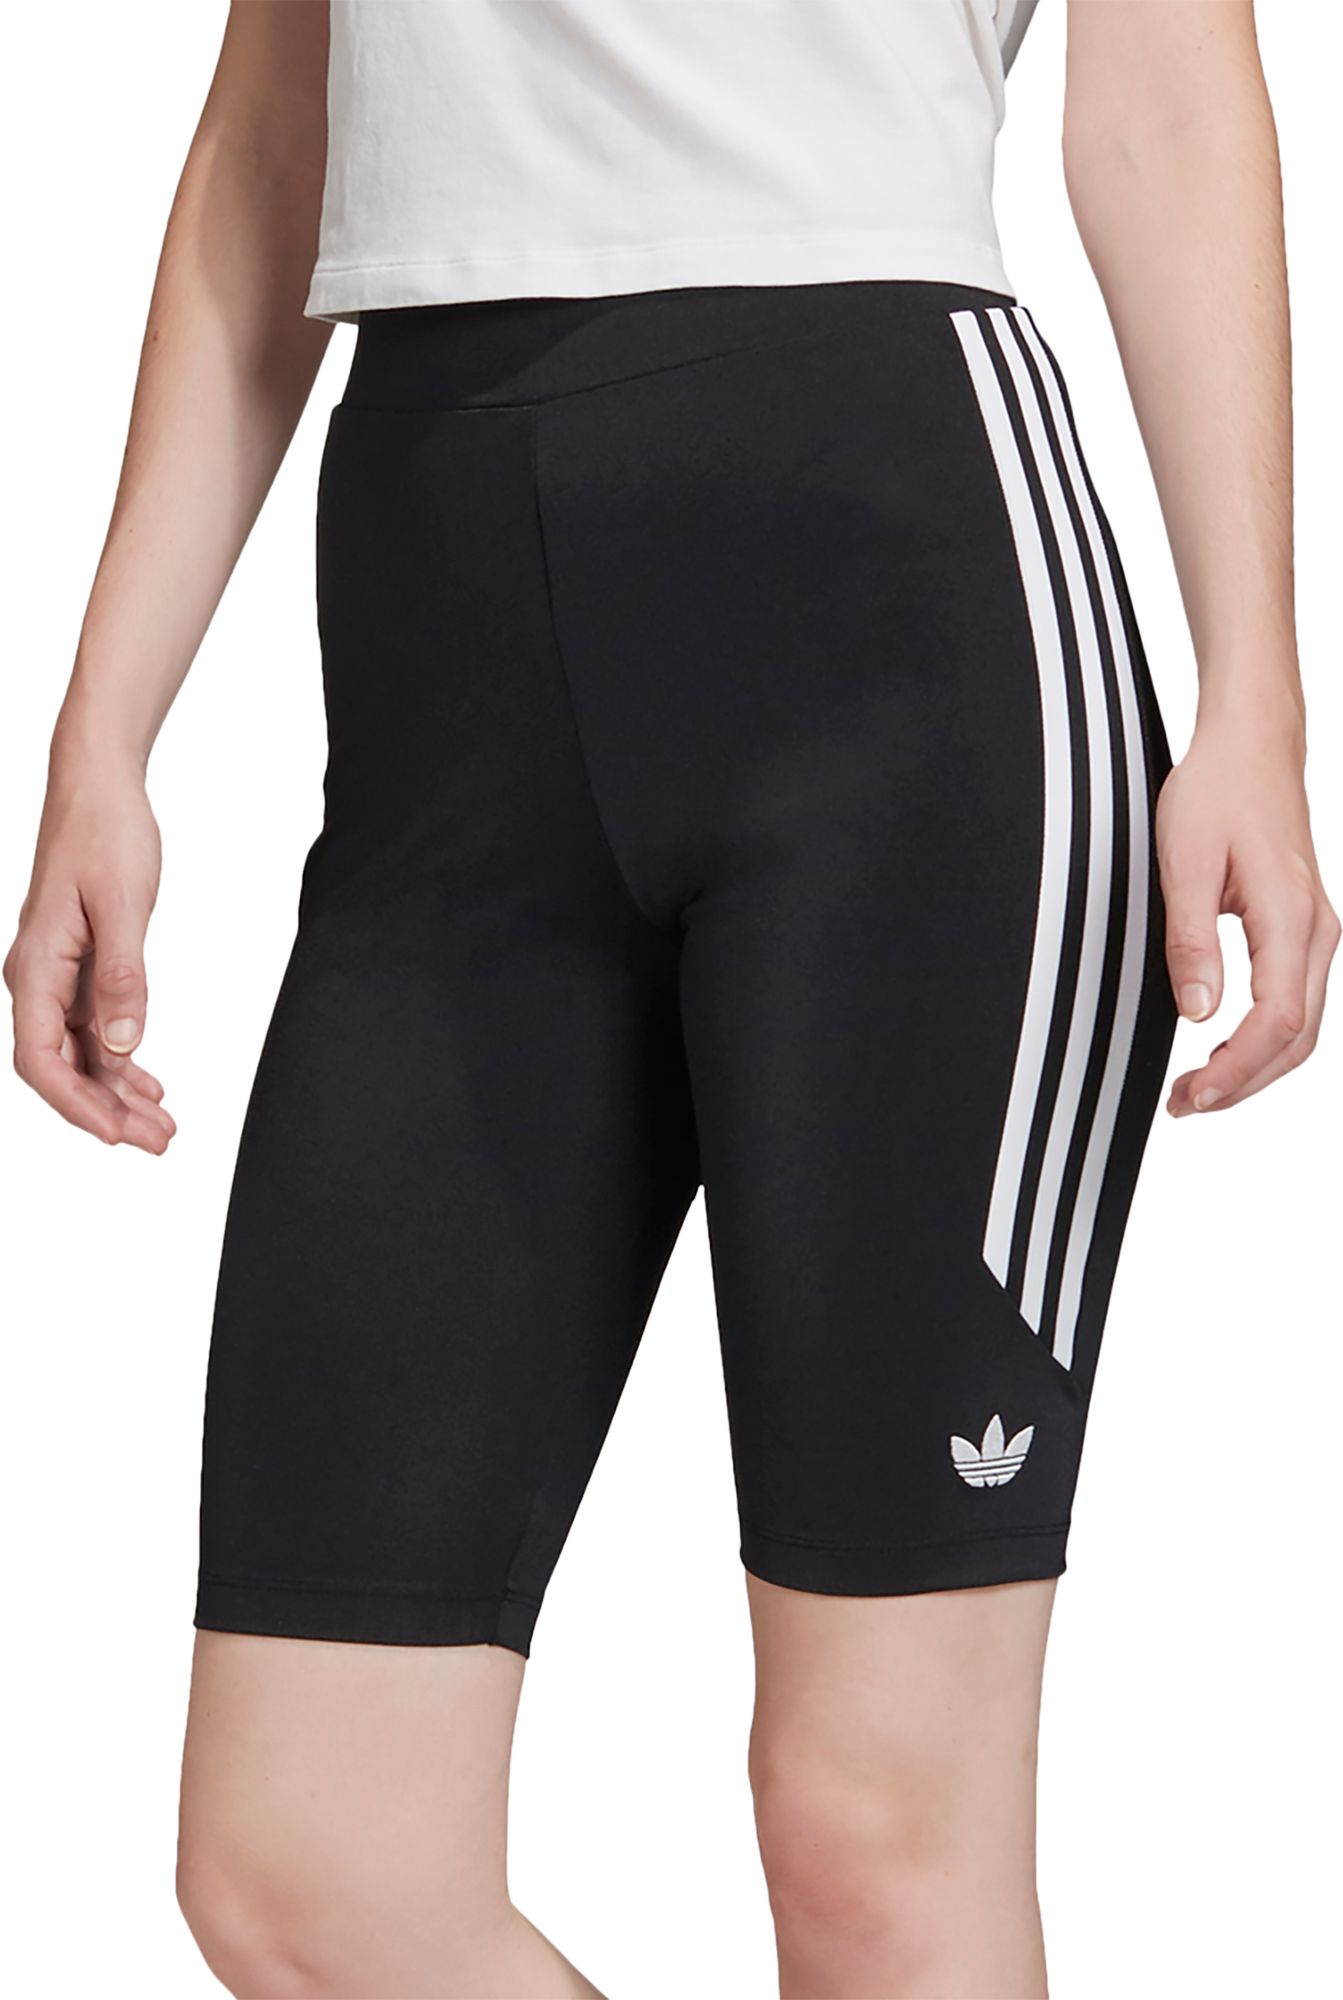 adidas originals bike shorts